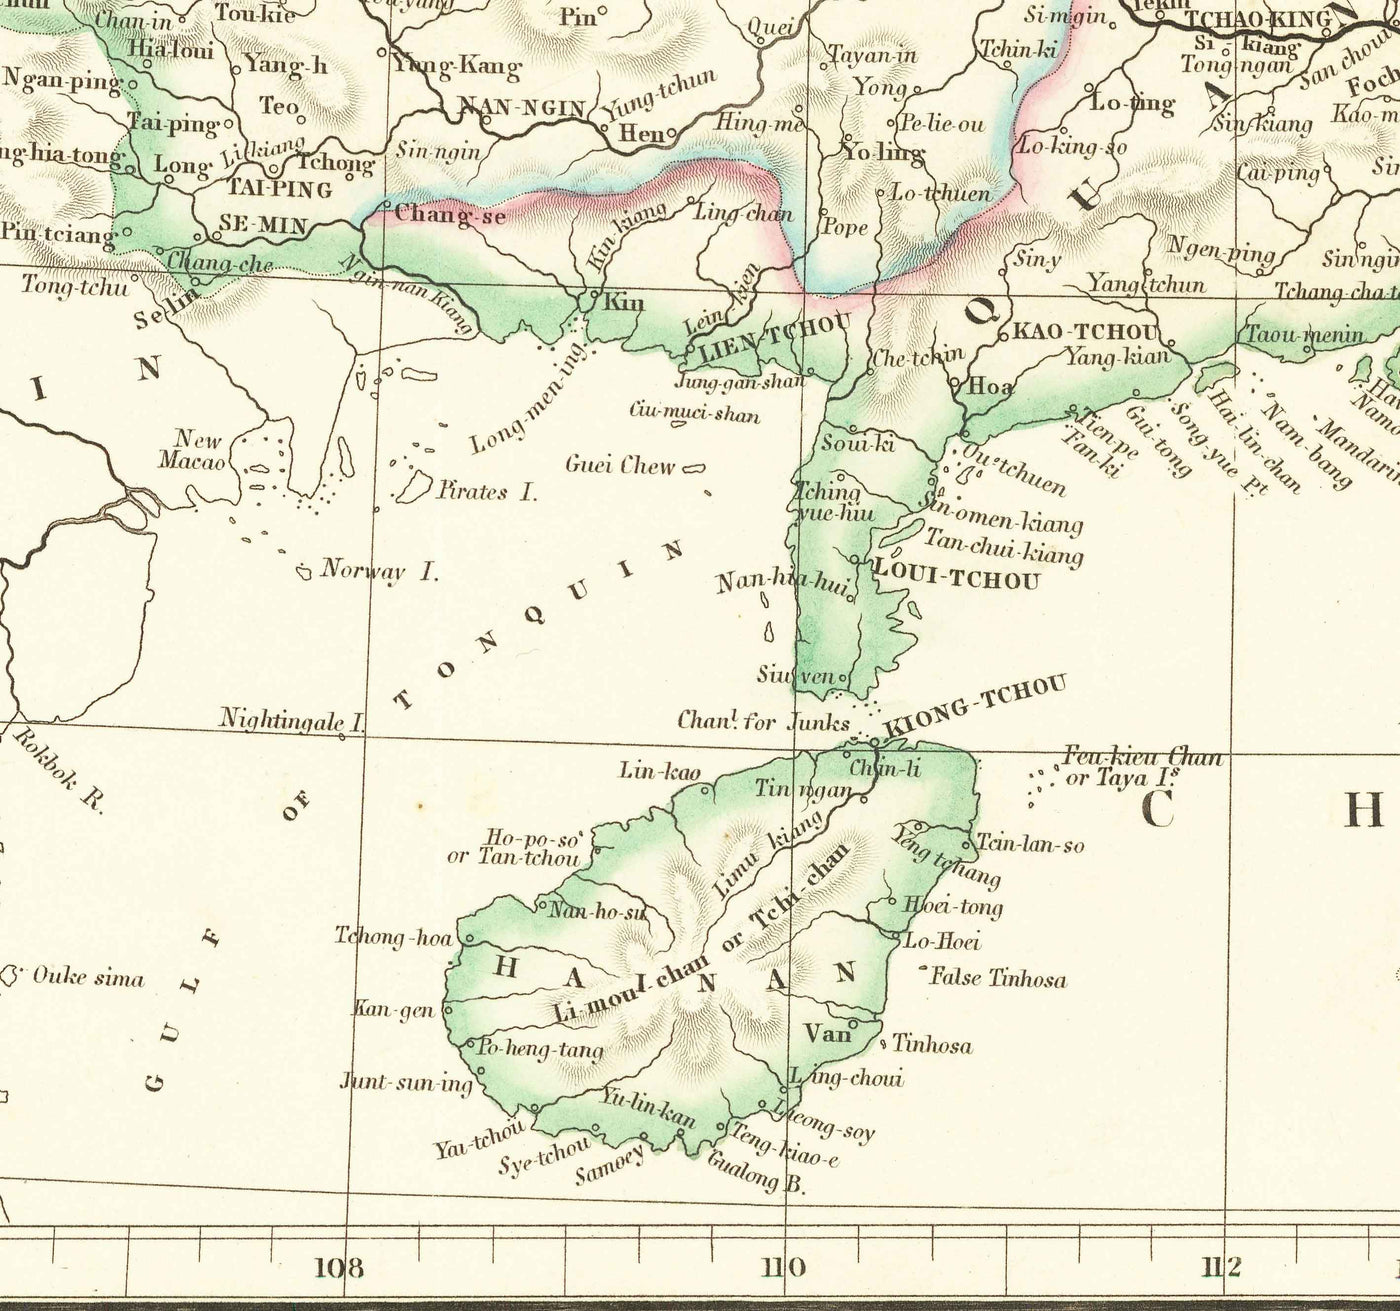 Old Map of China, 1840 by Arrowsmith - Korea, Canton, Peking, Sino-British Maccartney Embassy, Qianlong Emperor